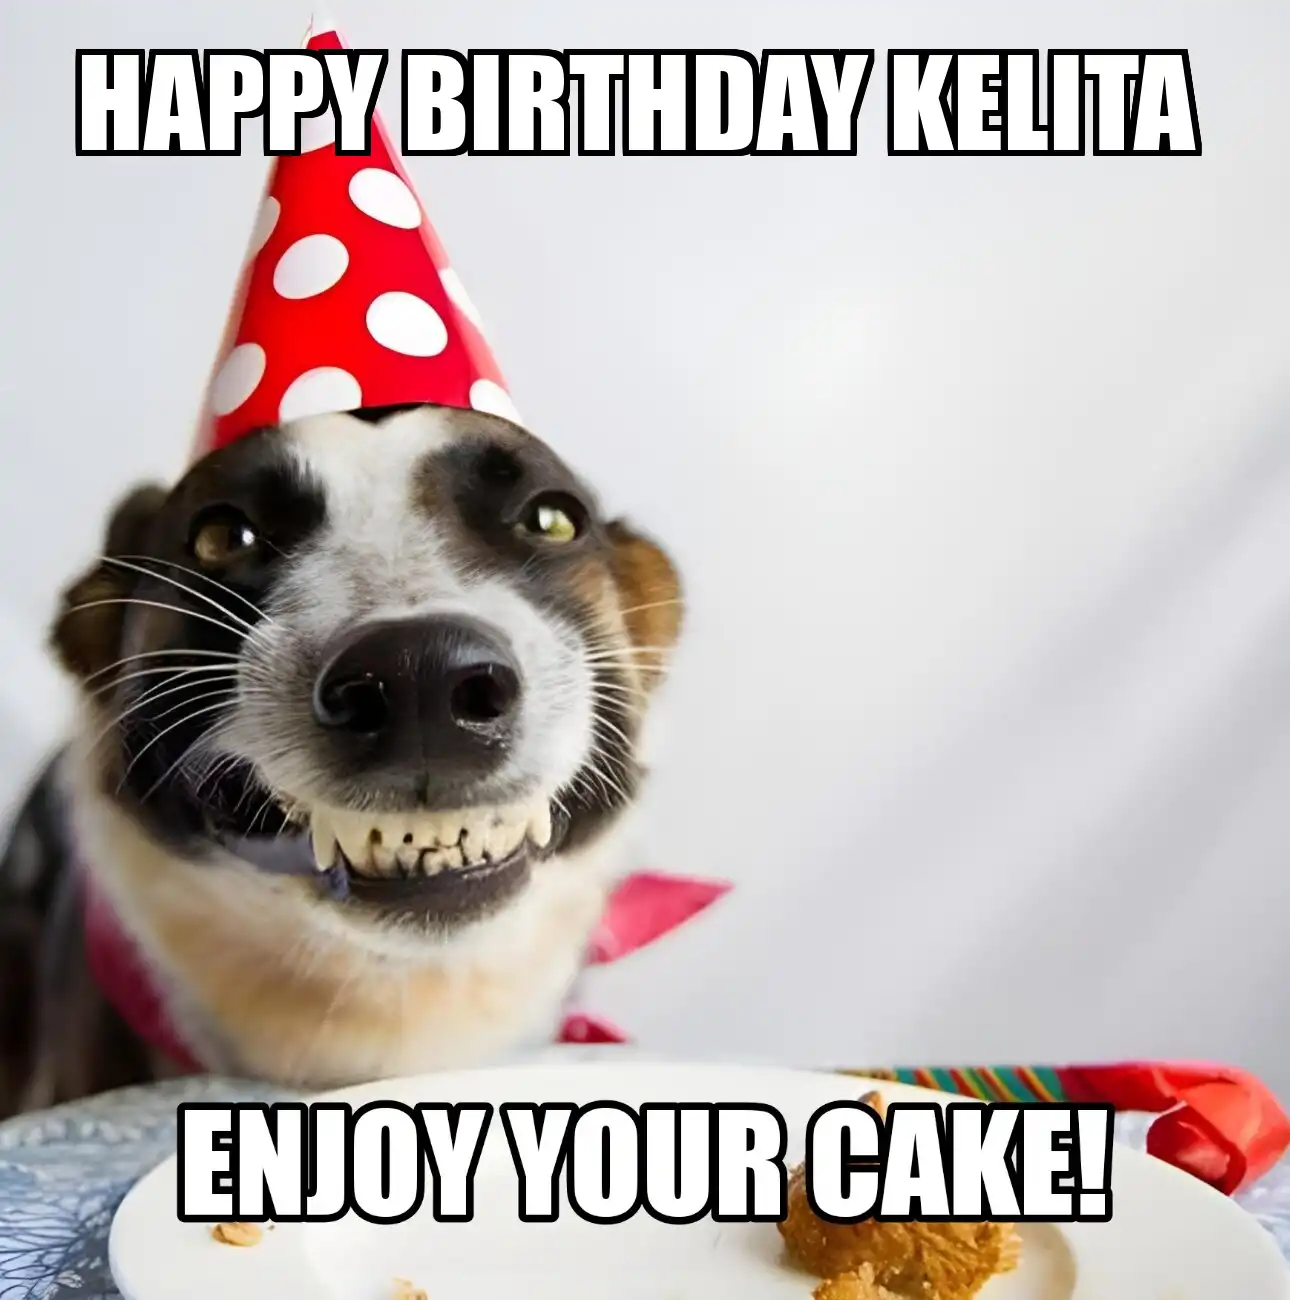 Happy Birthday Kelita Enjoy Your Cake Dog Meme